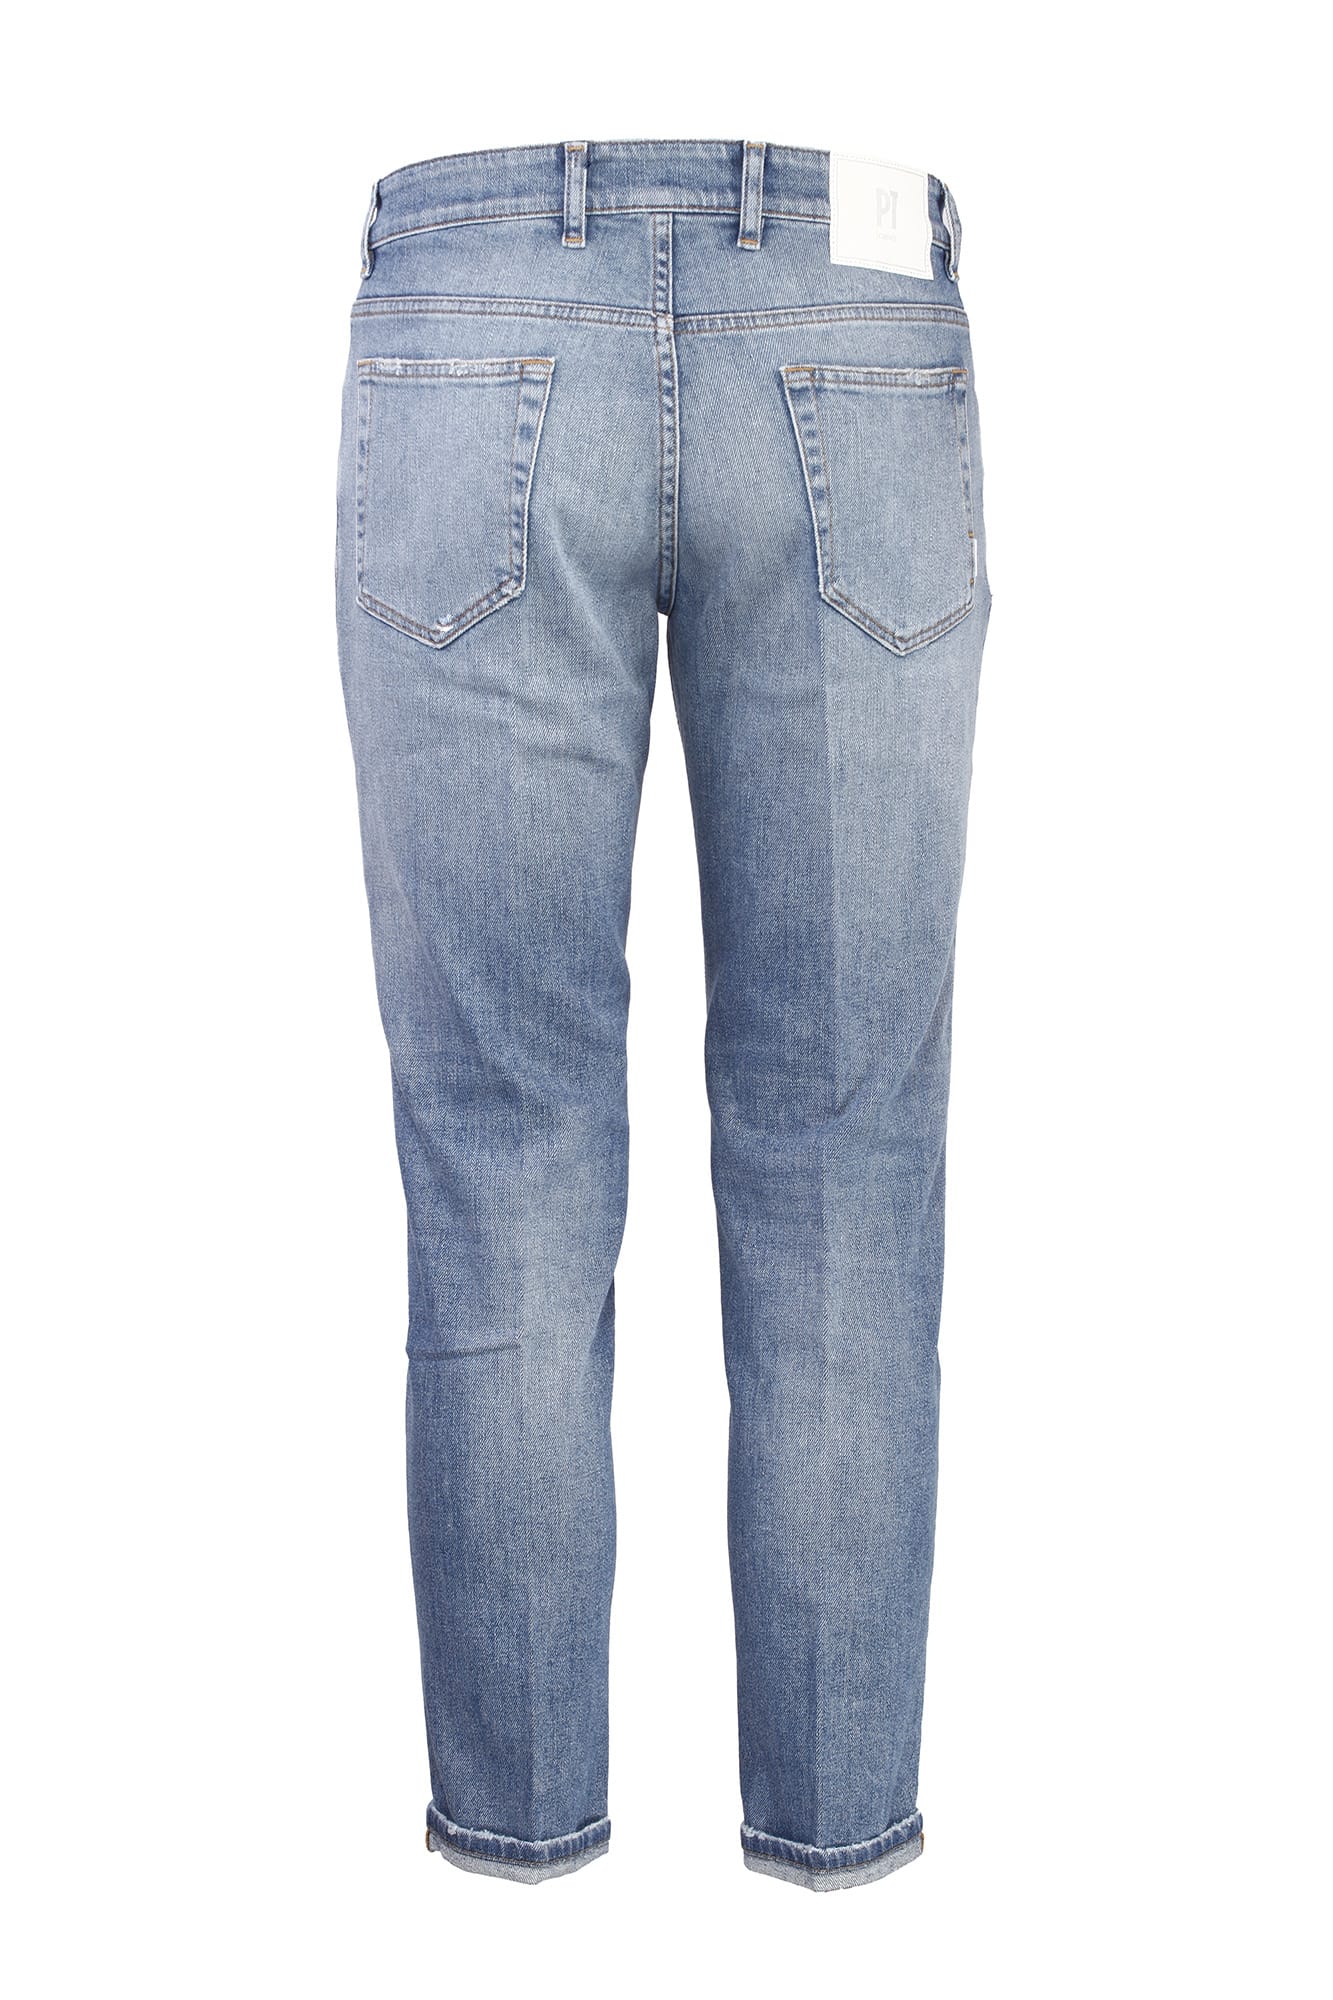 Shop Pt05 Jeans Denim